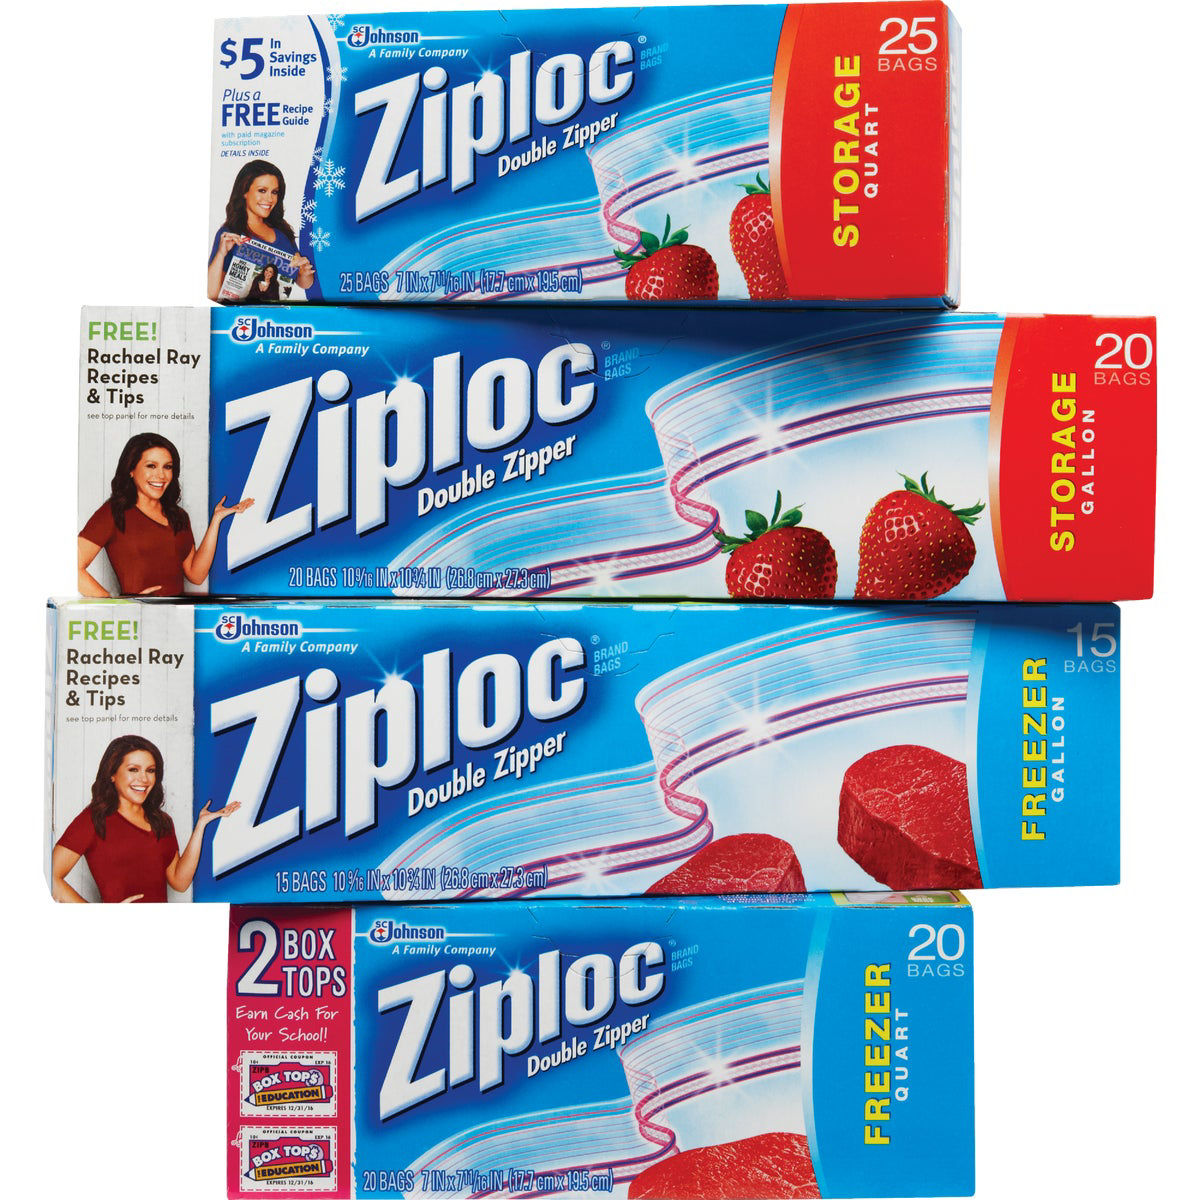 Buy Ziploc Food Storage Bag 1 Qt.